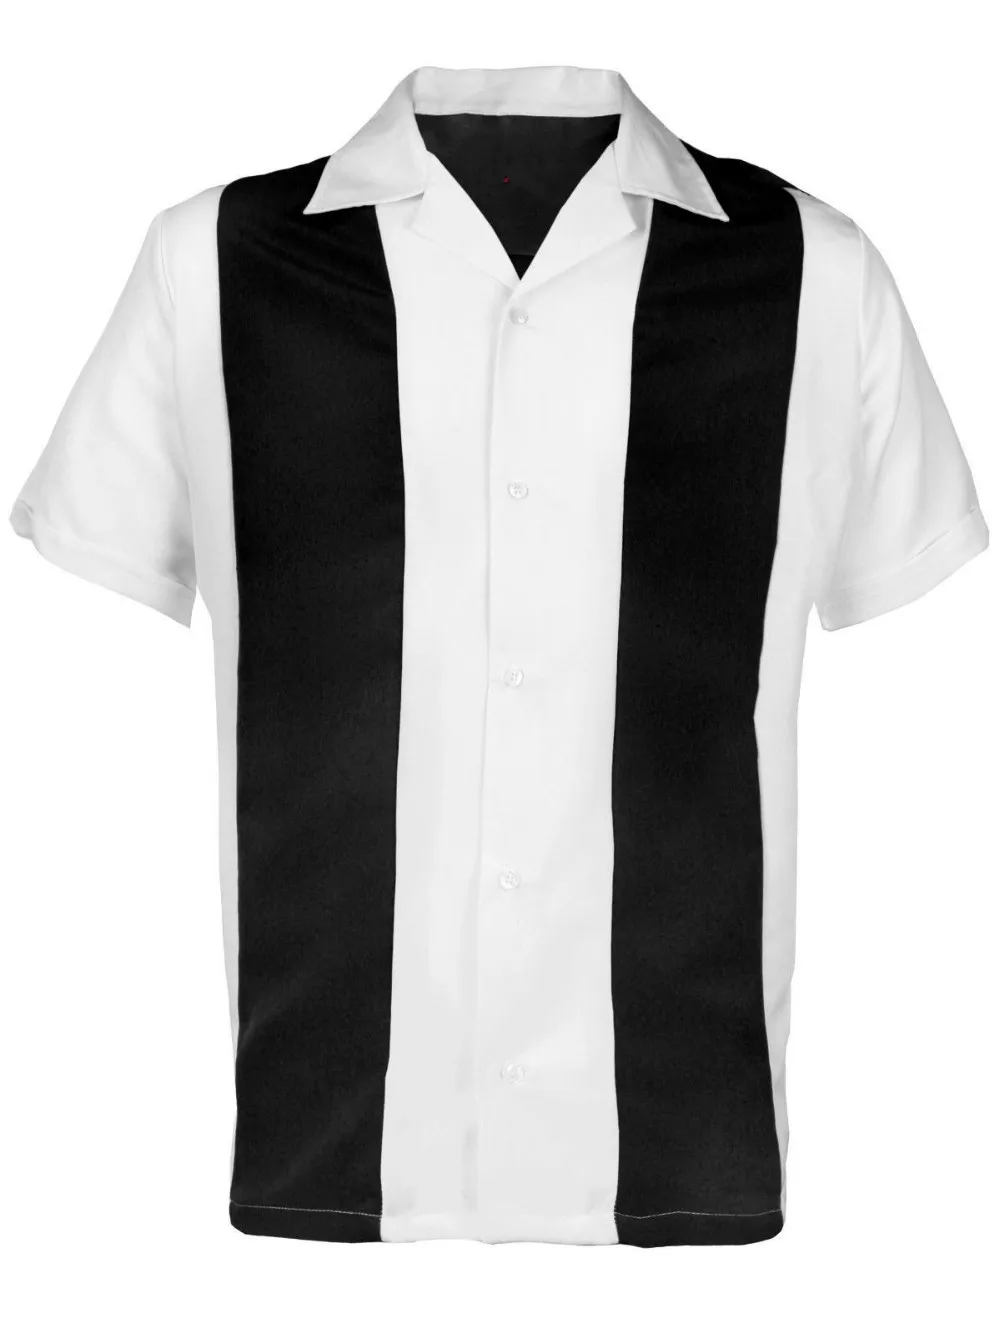 Custom Two Tone Colorful Retro Sport Bowling Shirt For Men - Buy ...